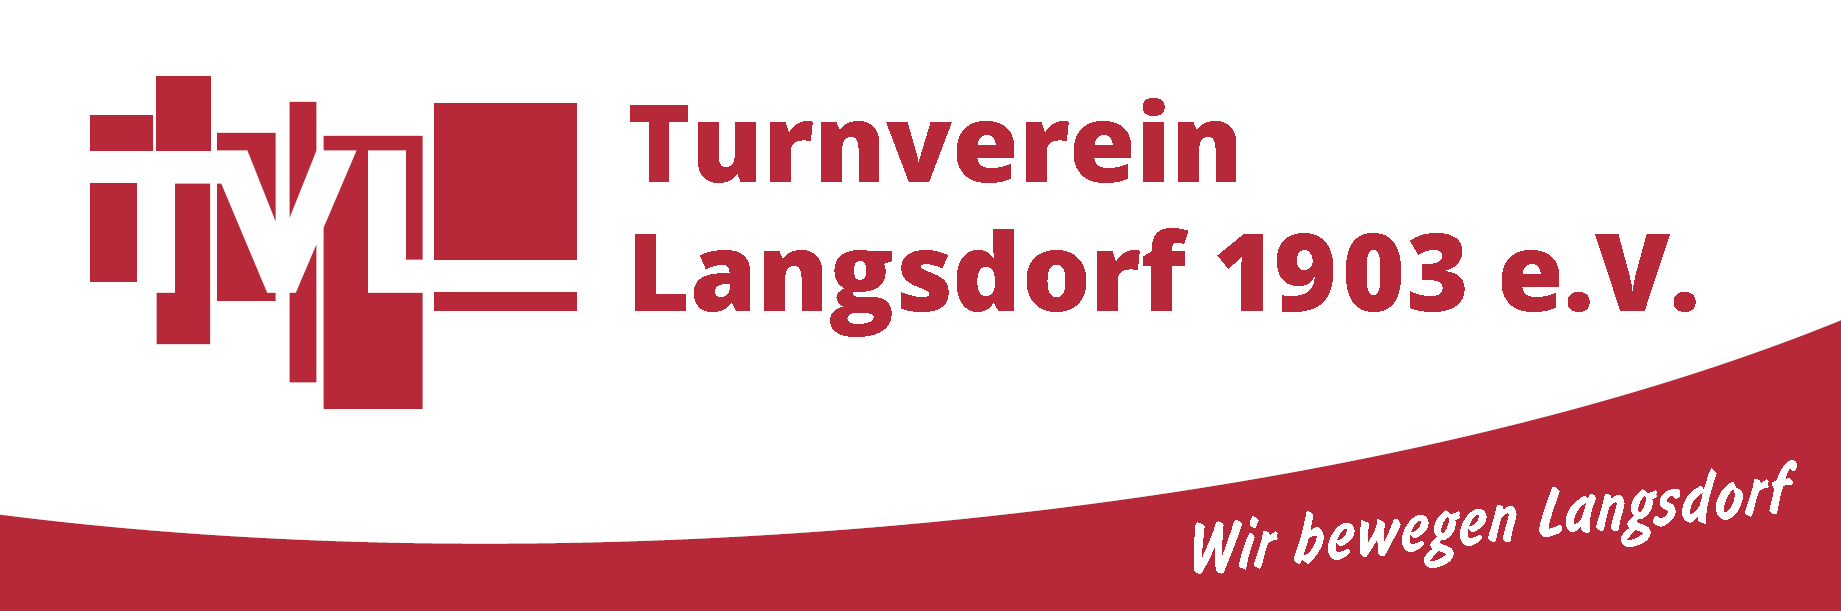 Banner: Turnverein Langsdorf 1903 e.V. Motto: Wir bewegen Langsdorf